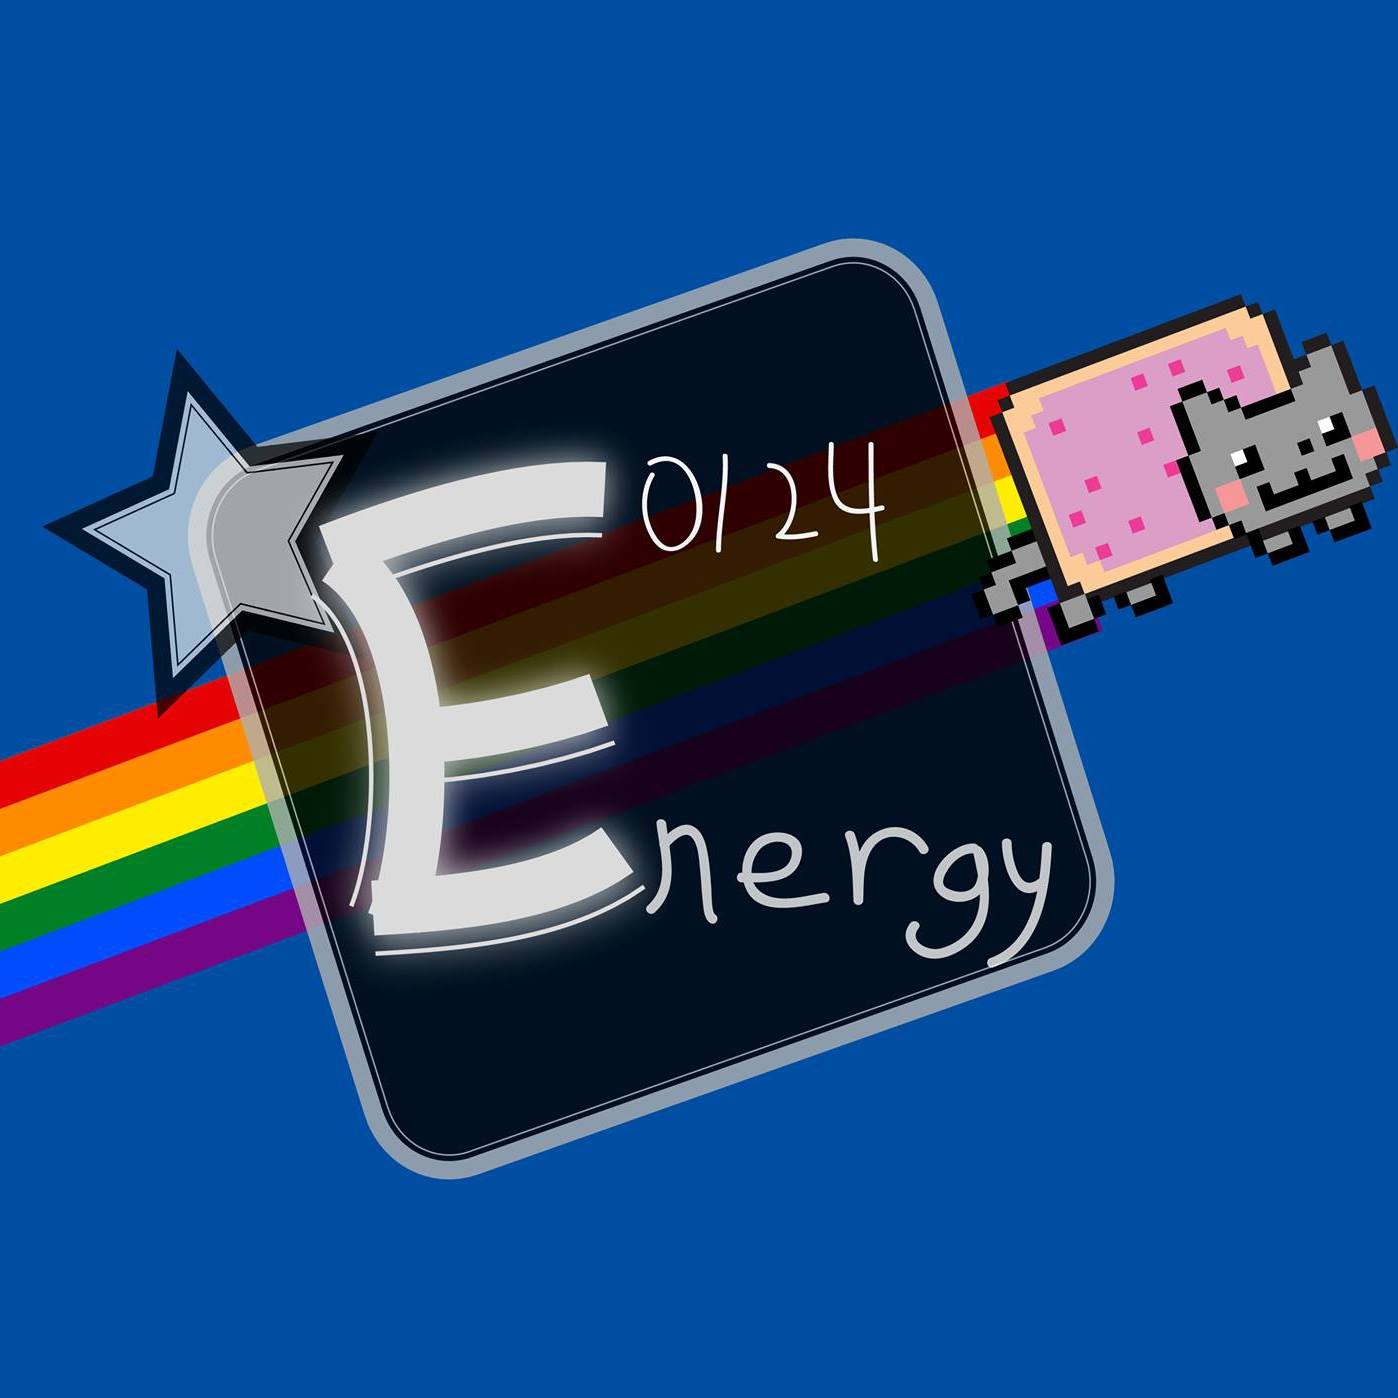 Energy0124